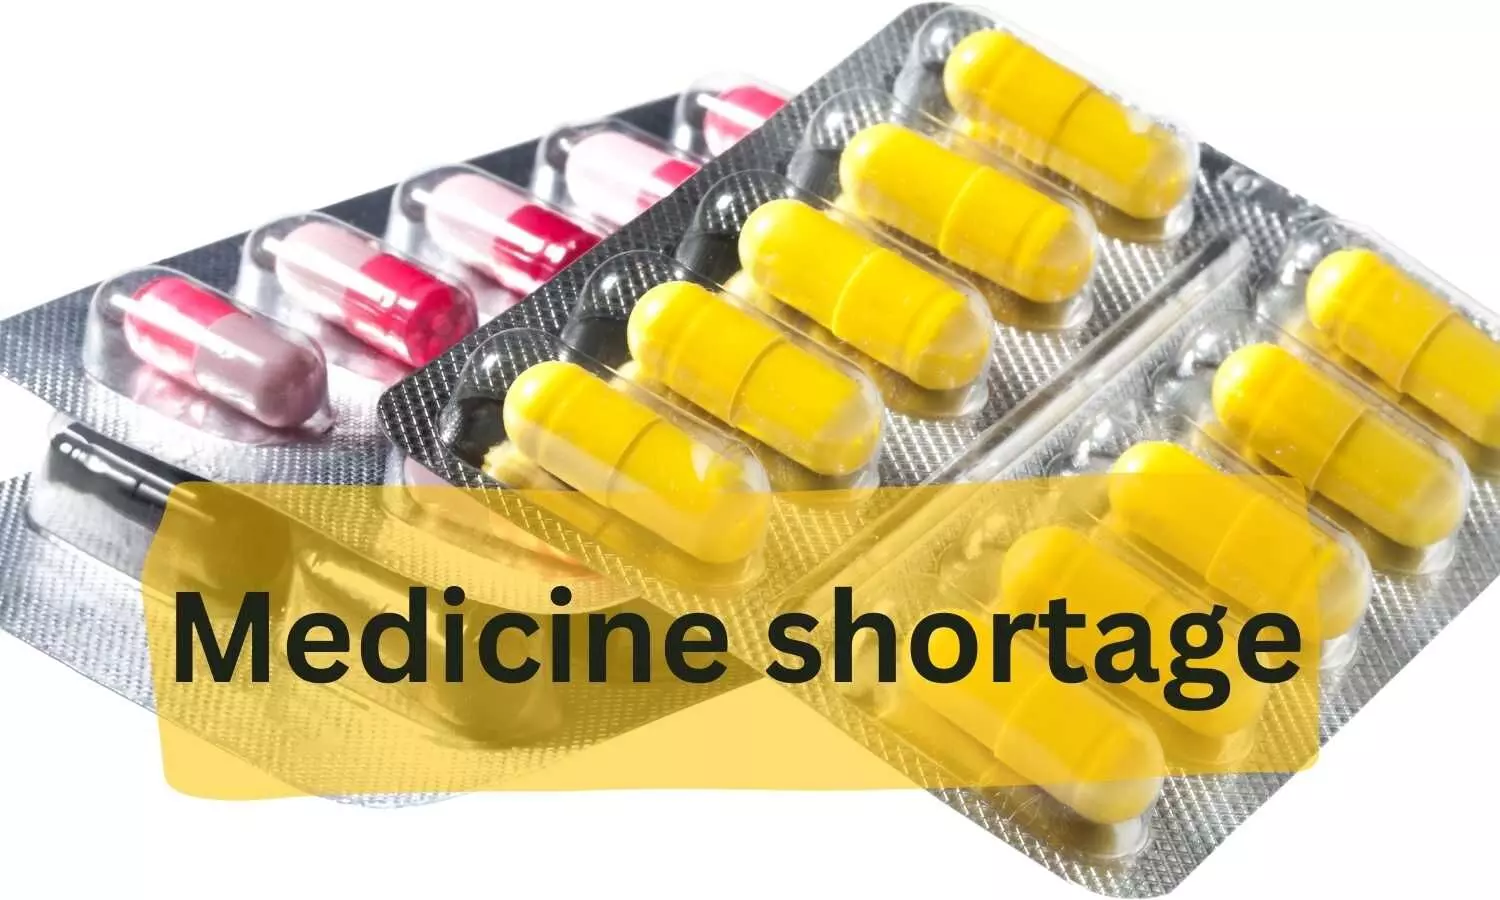 Switzerland experiencing medicine shortages: Pharmacists association